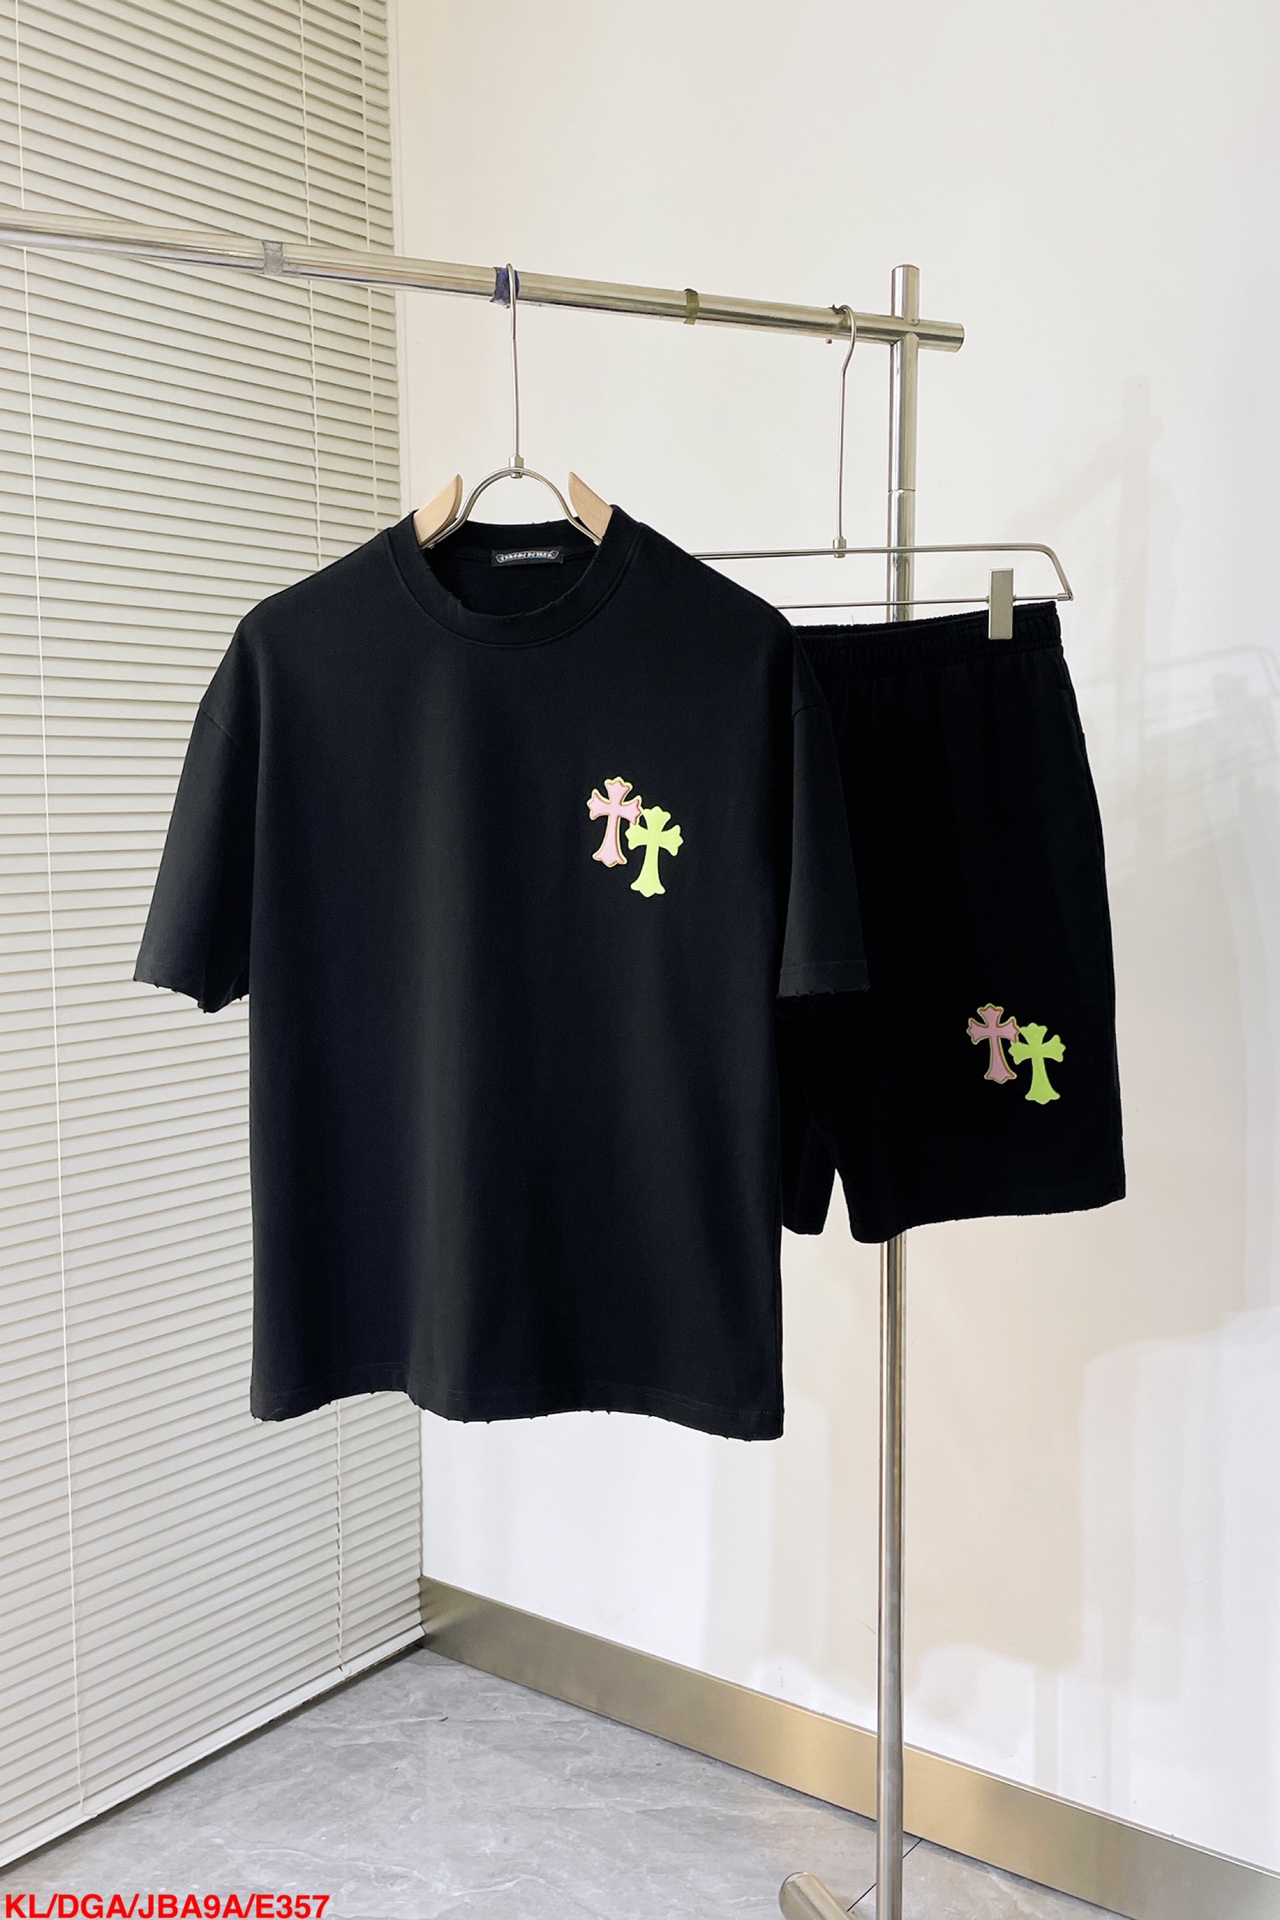 Chrome Hearts Clothing T-Shirt Black White Embroidery Fashion Short Sleeve